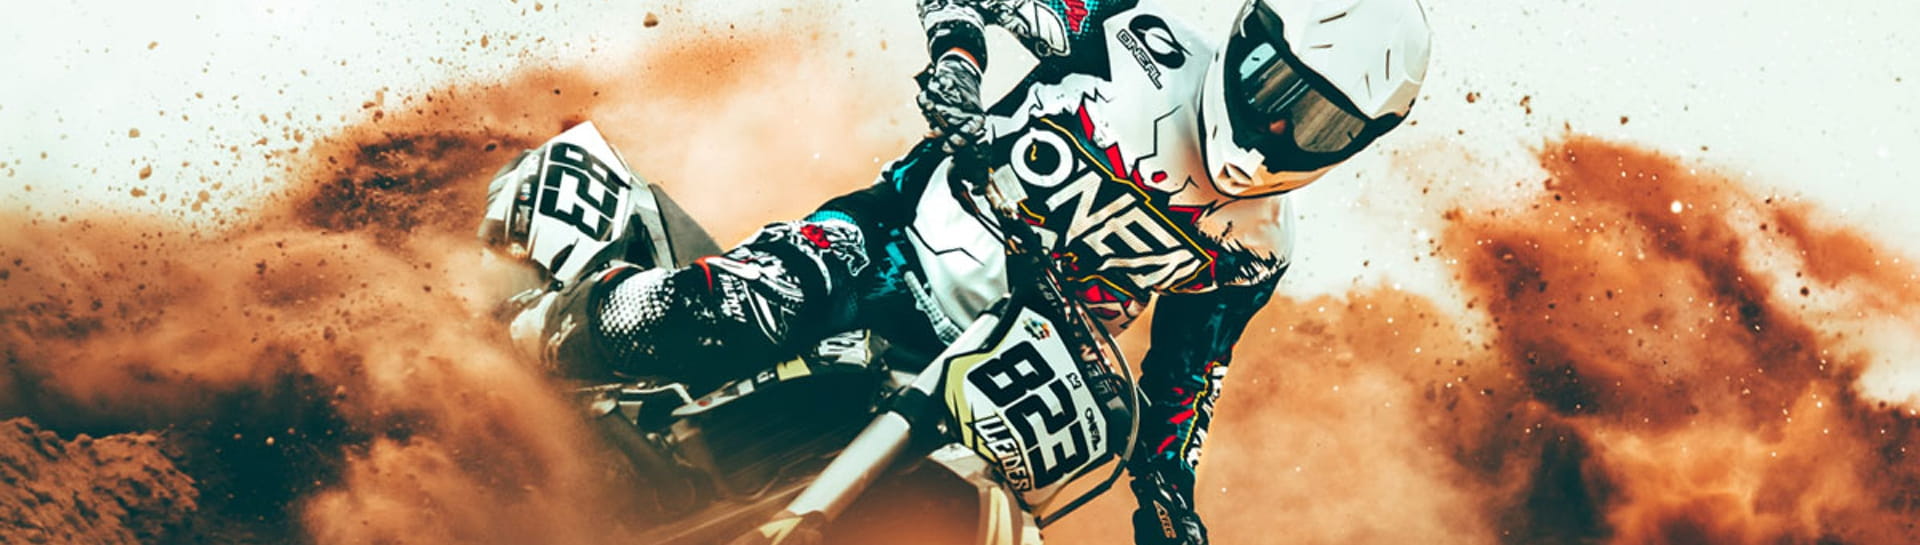 Motocross & Enduro